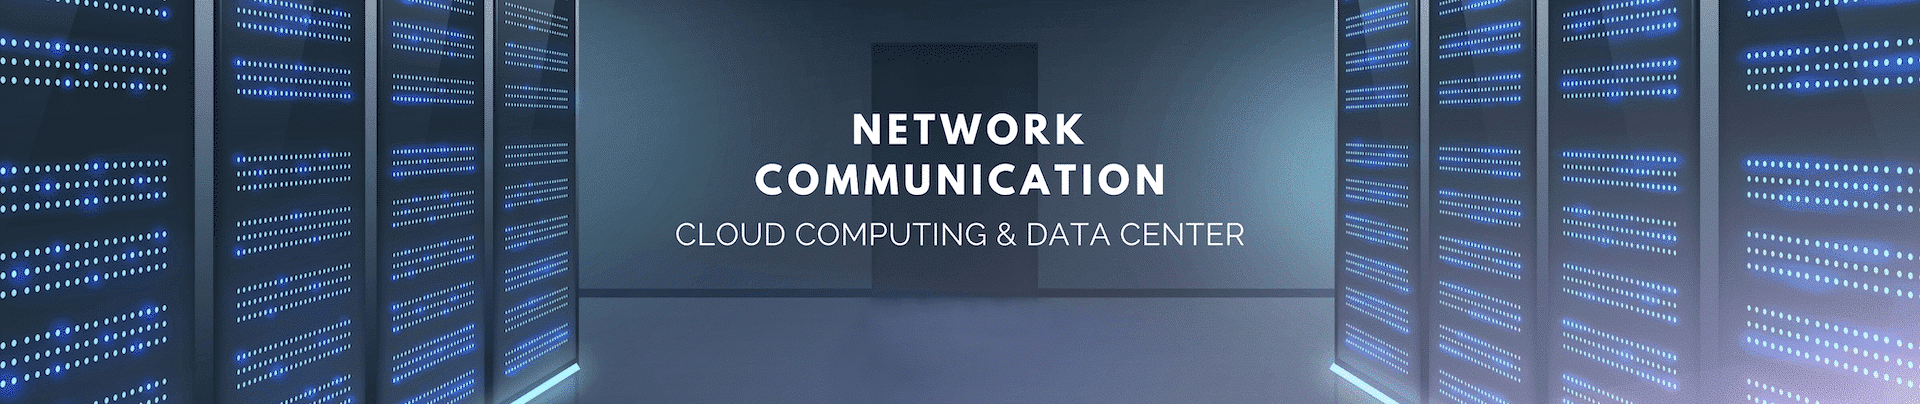 network-communication-banner3